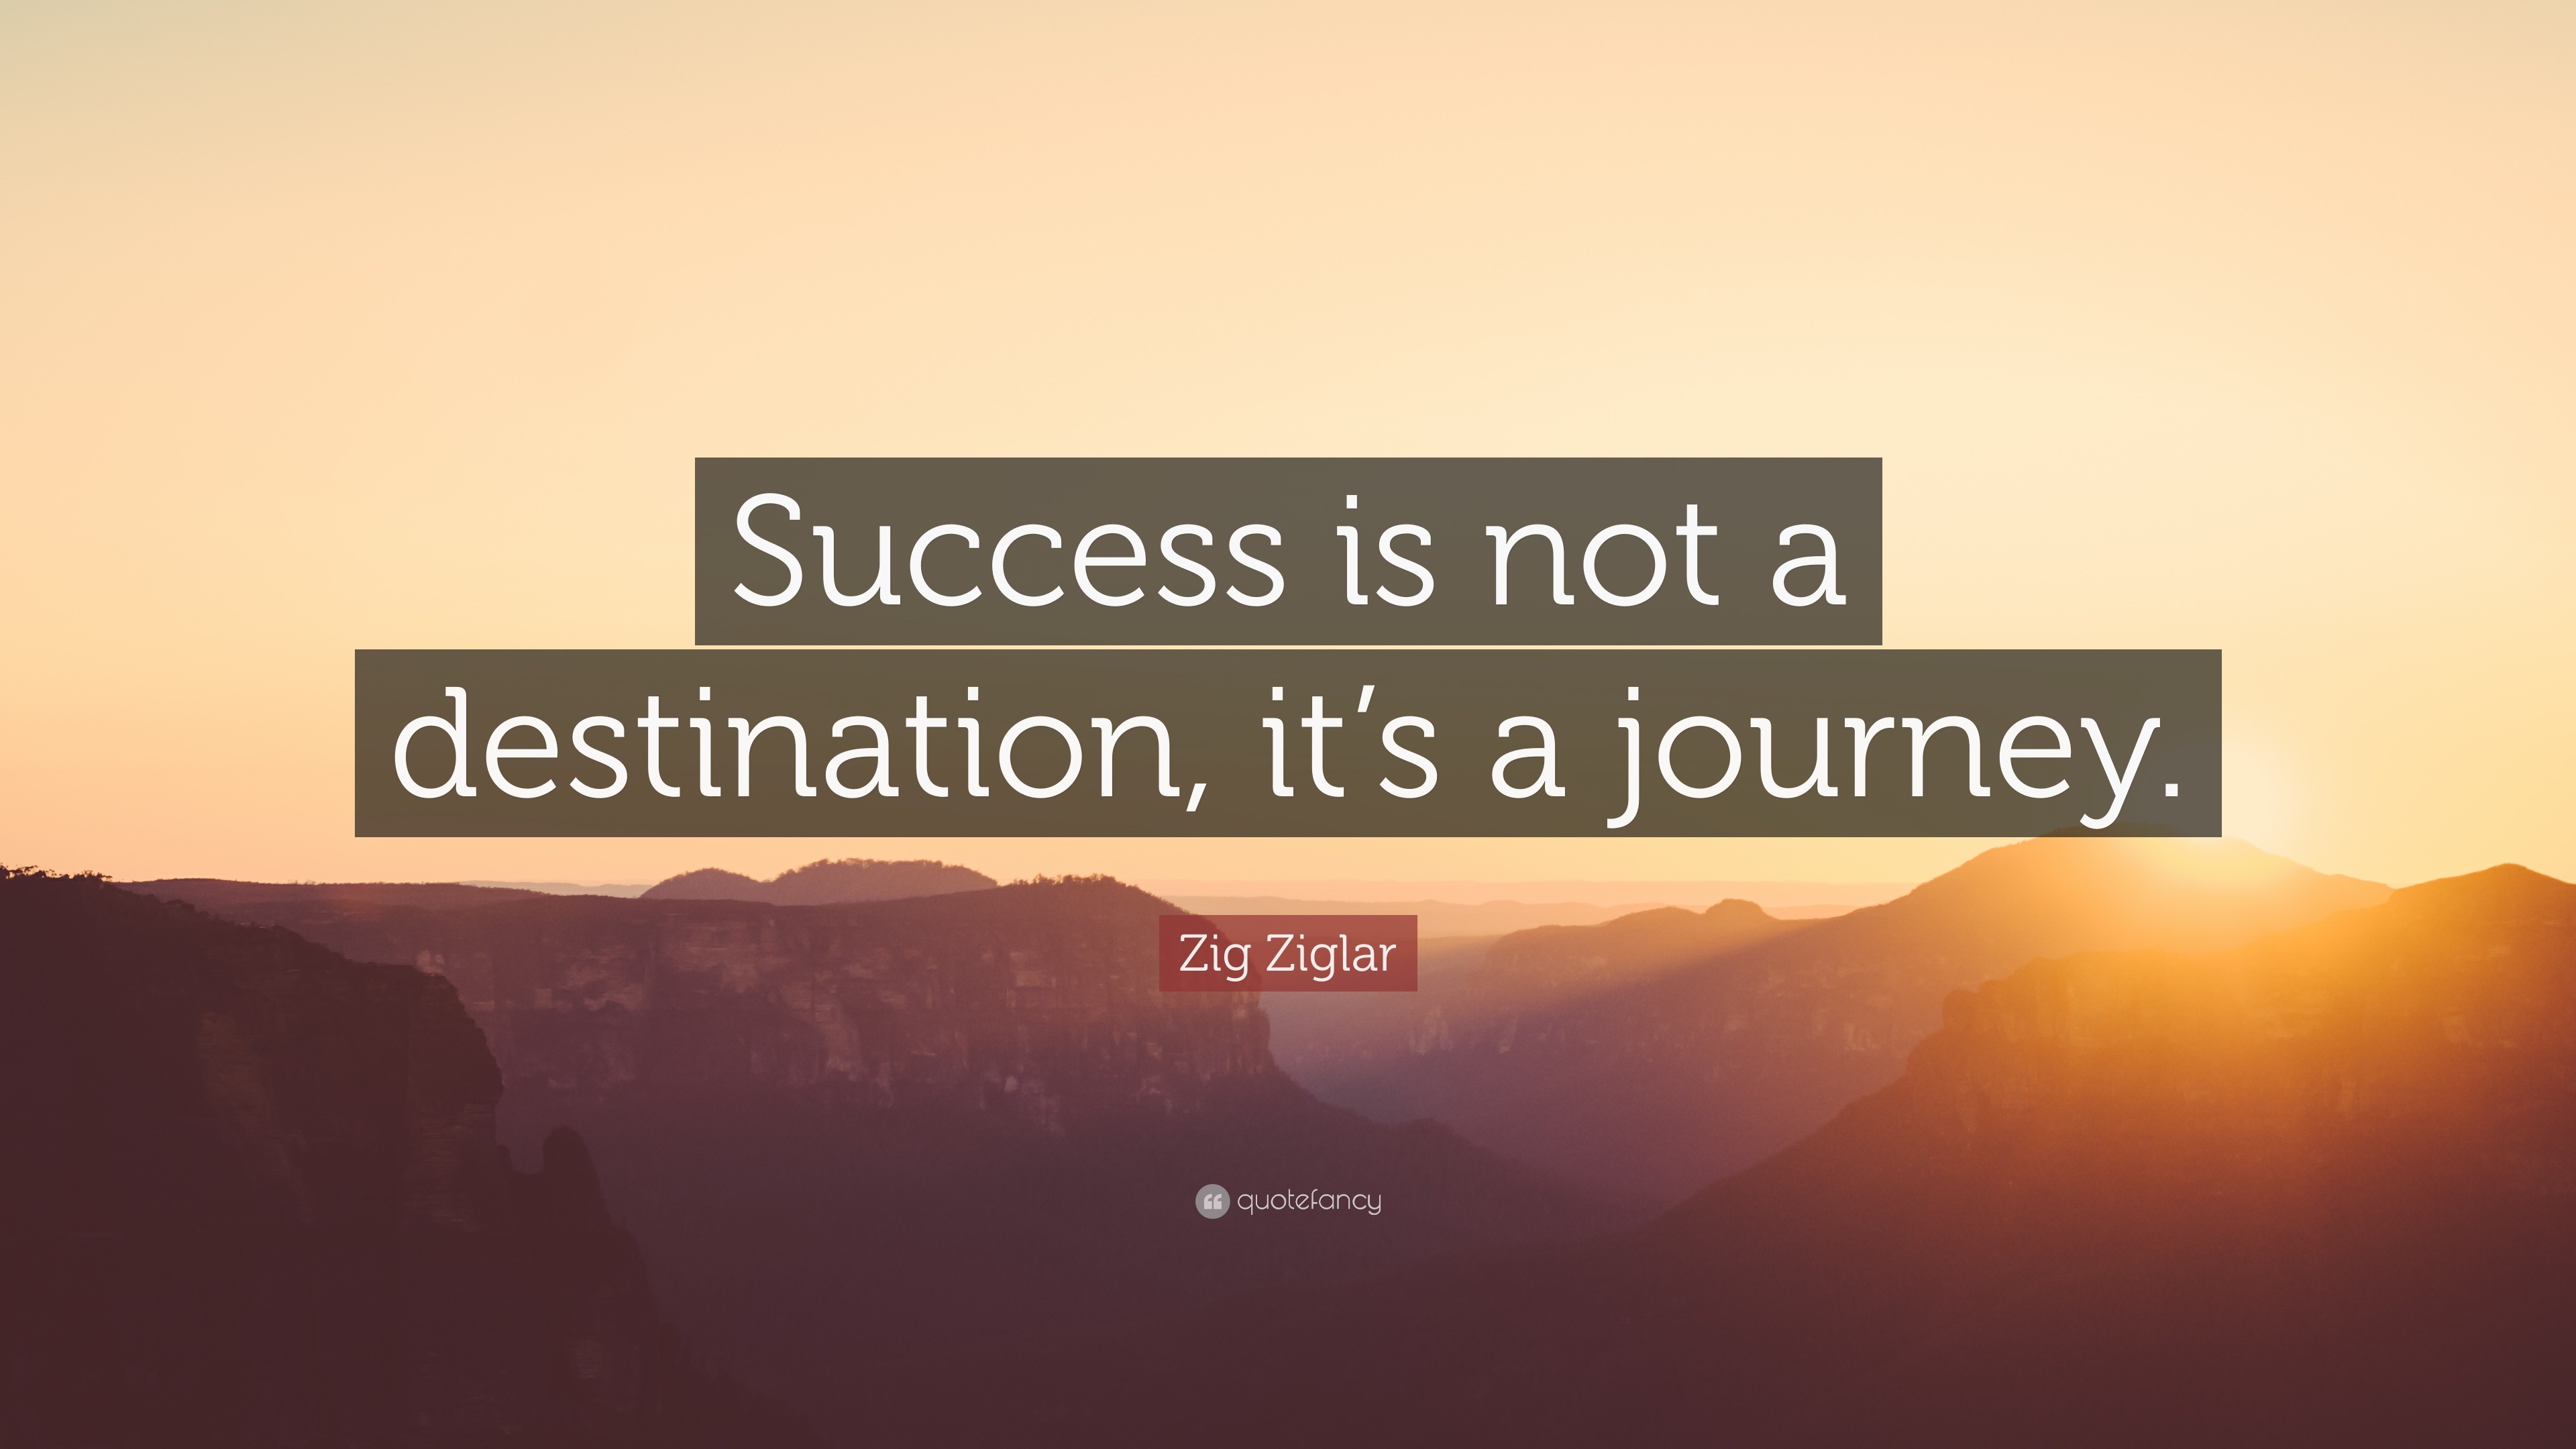 Zig Ziglar Quote “Success is not a destination it s a journey ”